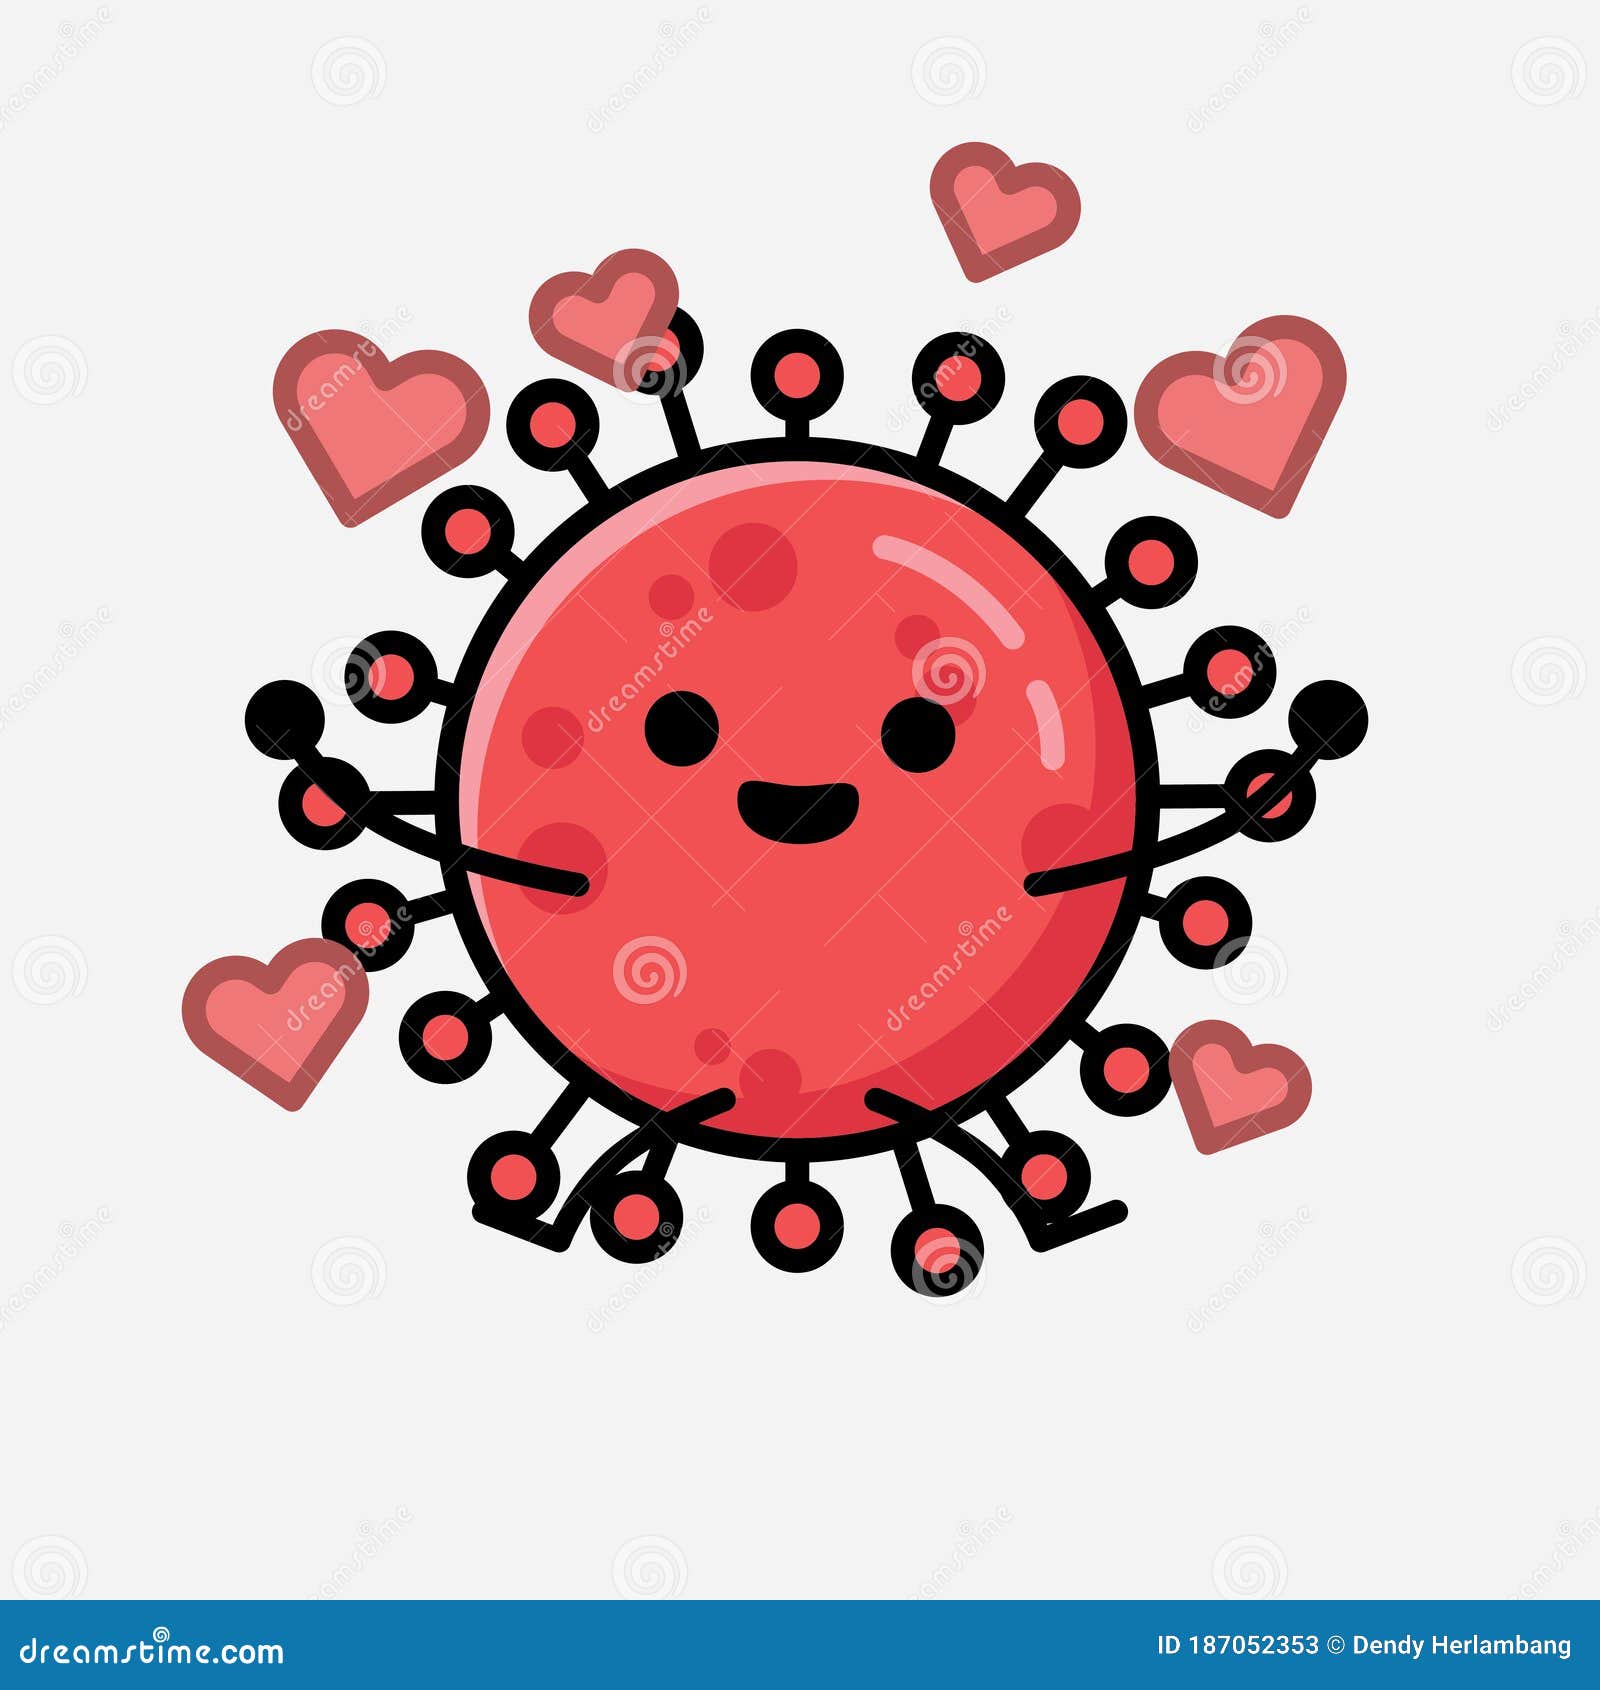 Cute Red Corona Virus Mascot Vector Character in Flat Design Style ...